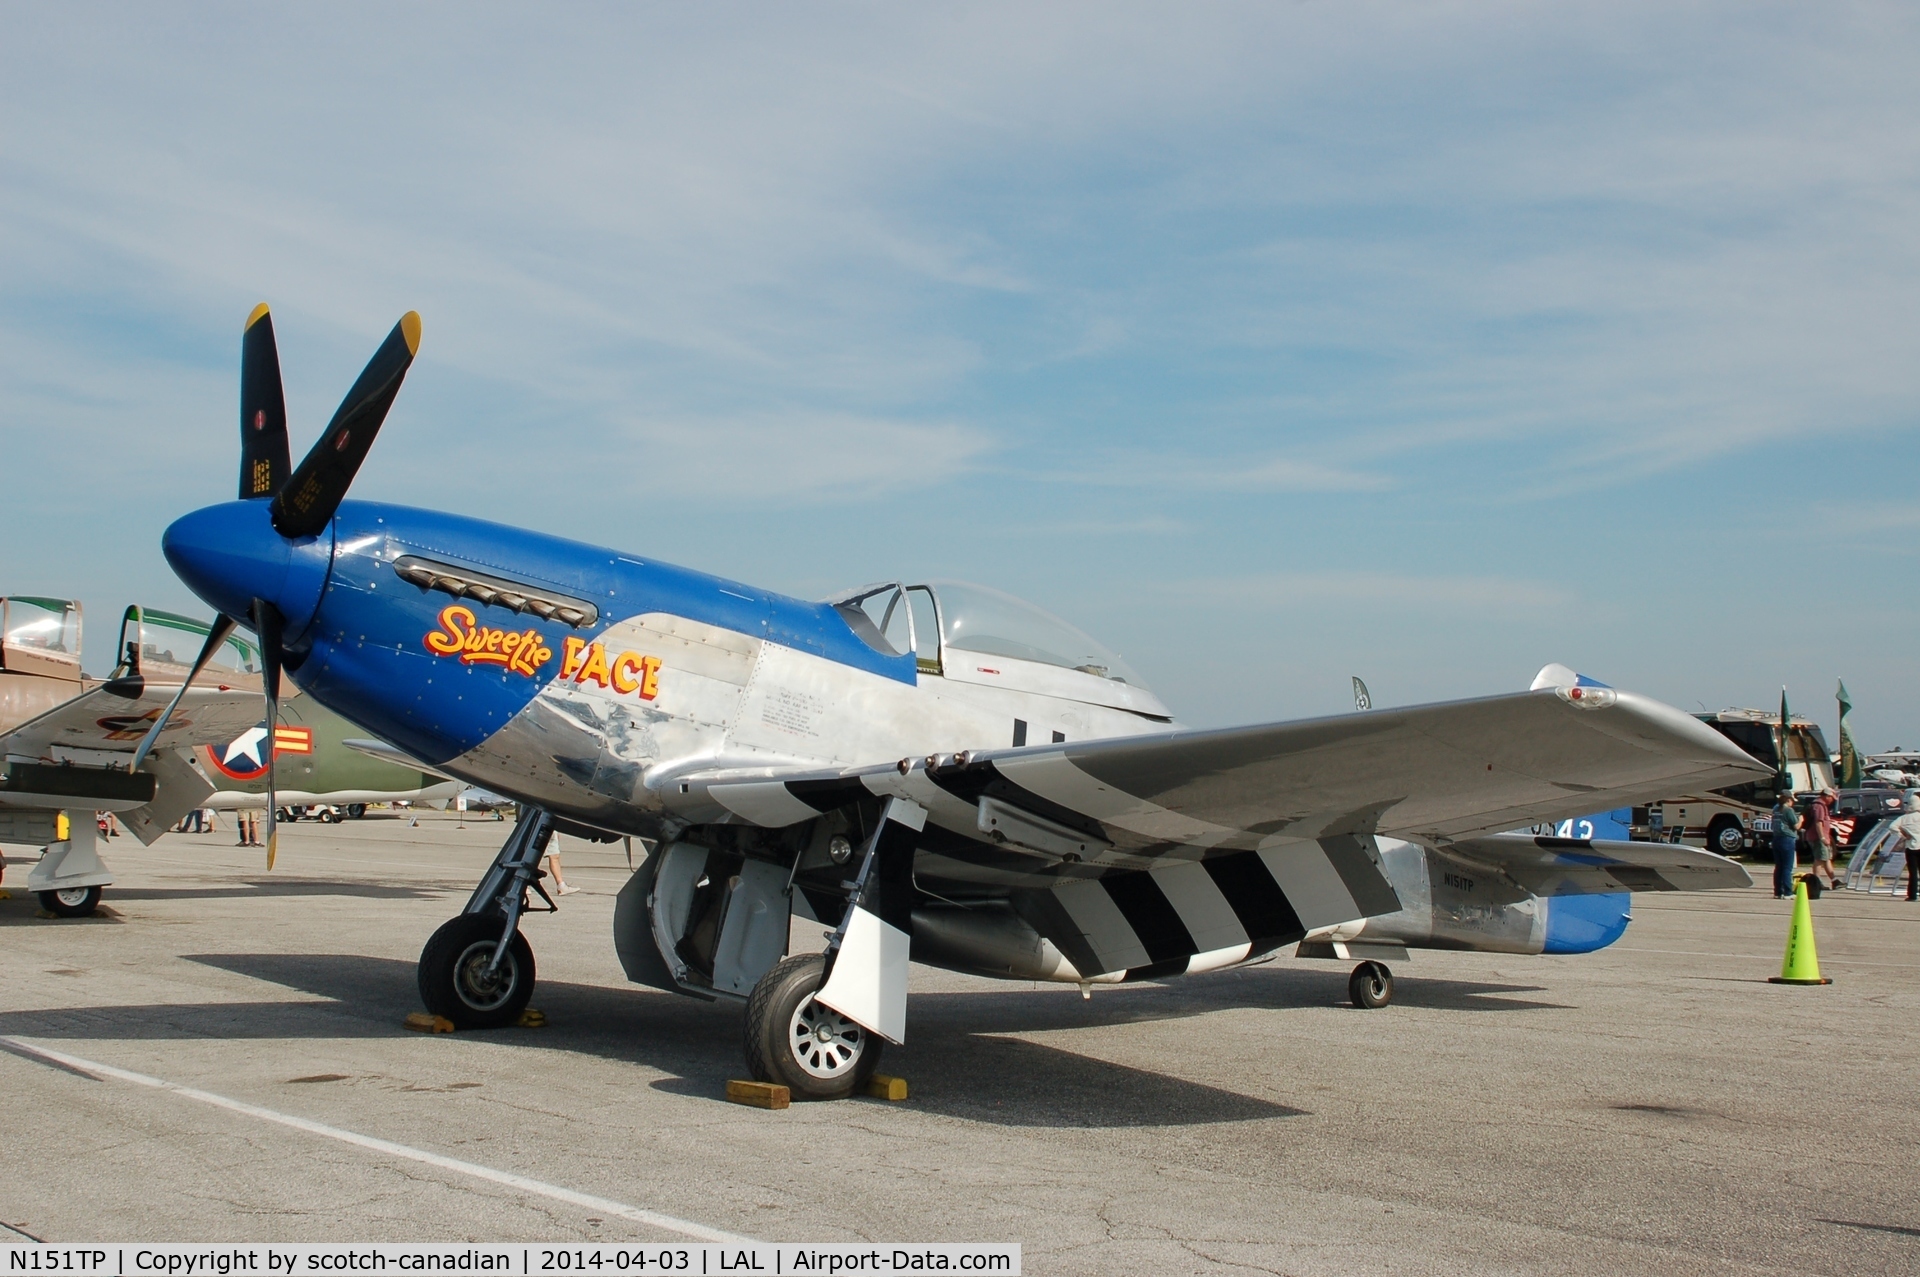 N151TP, 1944 North American P-51D Mustang C/N 122-40007, North American F-51D, N151TP (Sweetie Face), at 2014 Sun n Fun, Lakeland Linder Regional Airport, Lakeland, FL